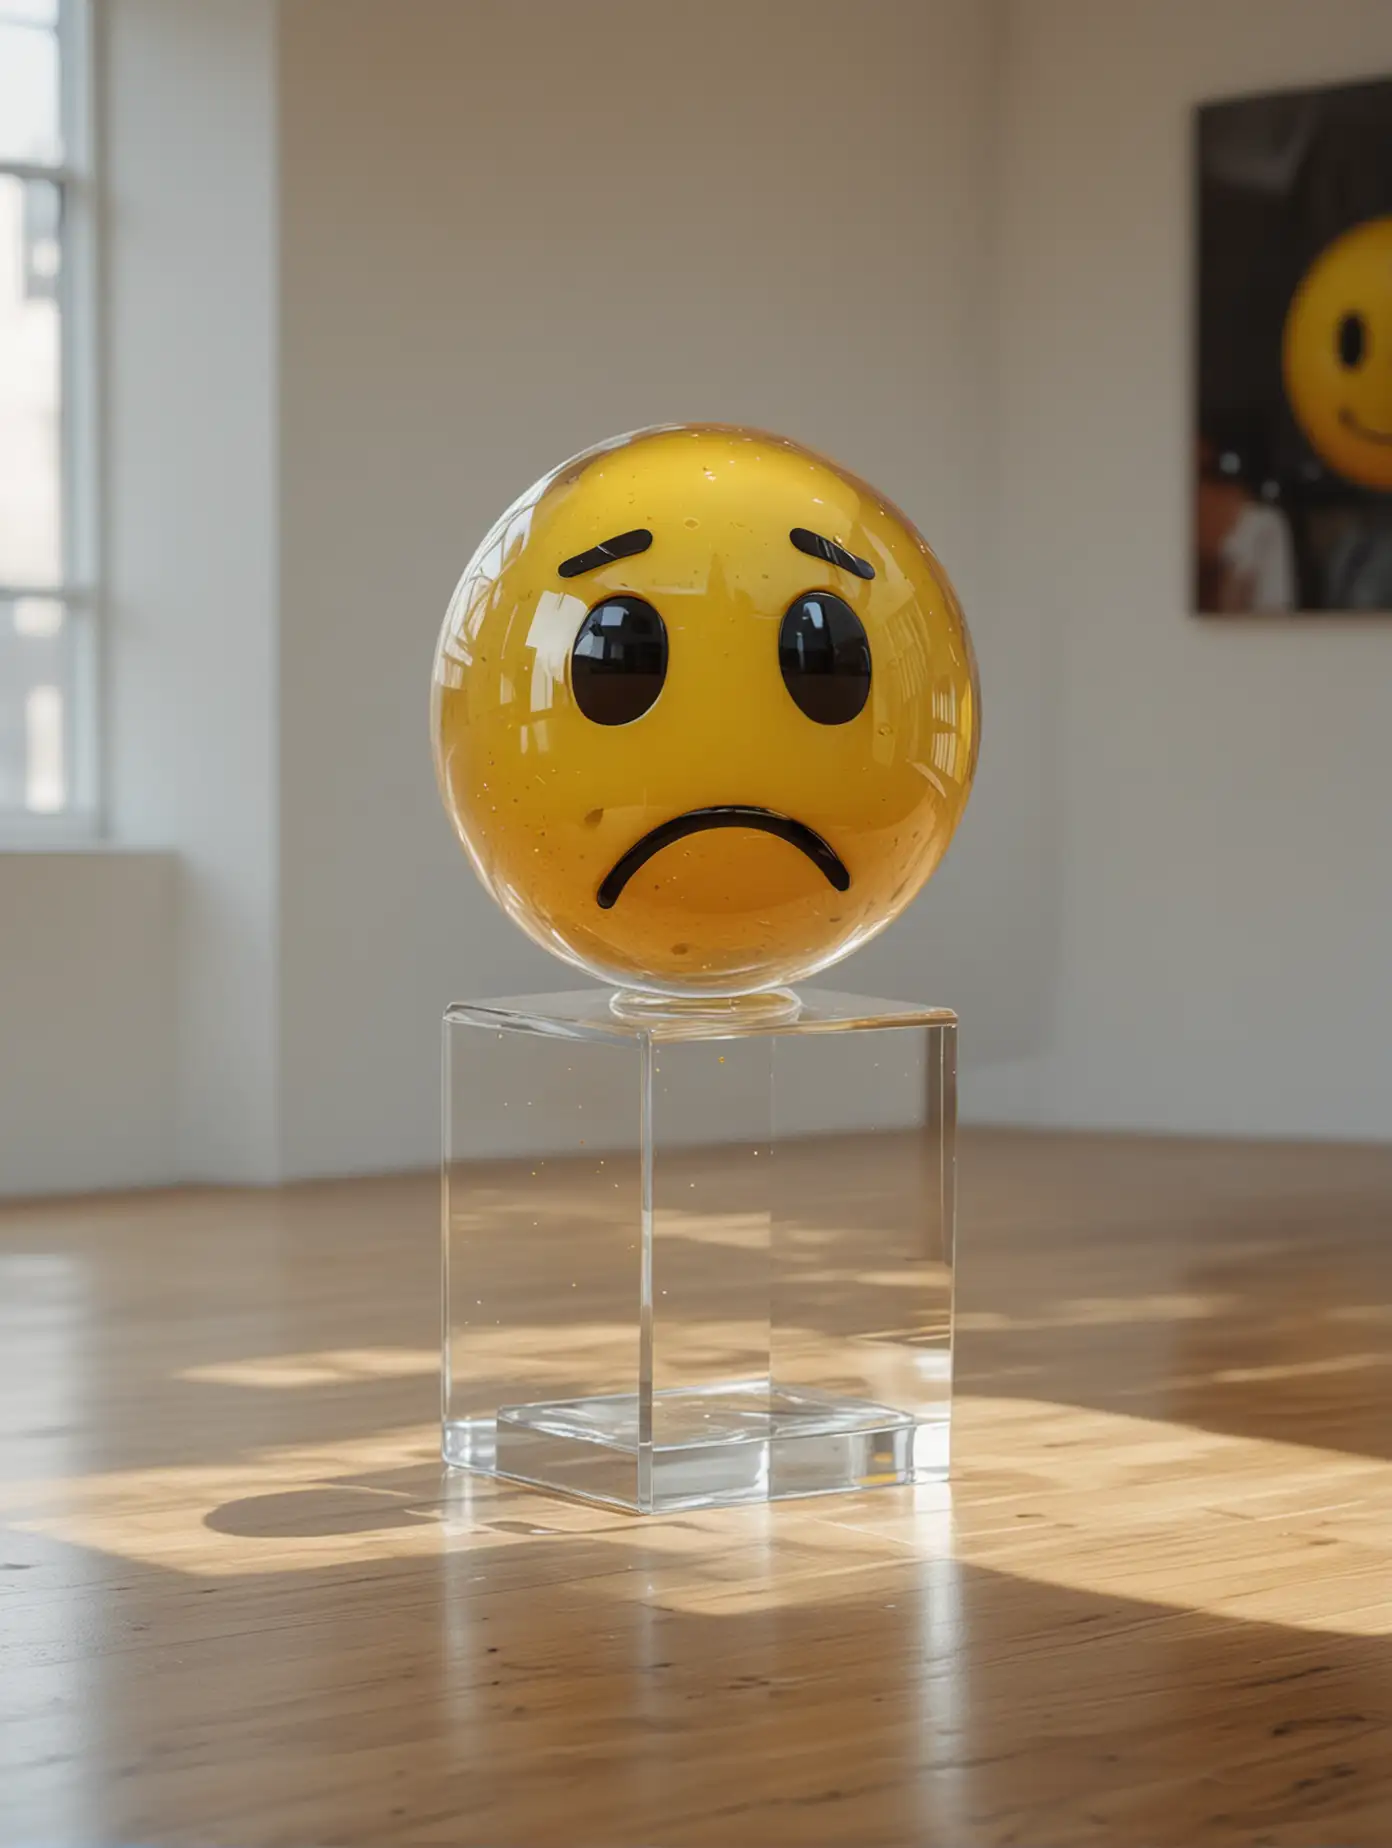 Glass Emoji Sculpture Depicting Sadness in Realistic Art Gallery Setting